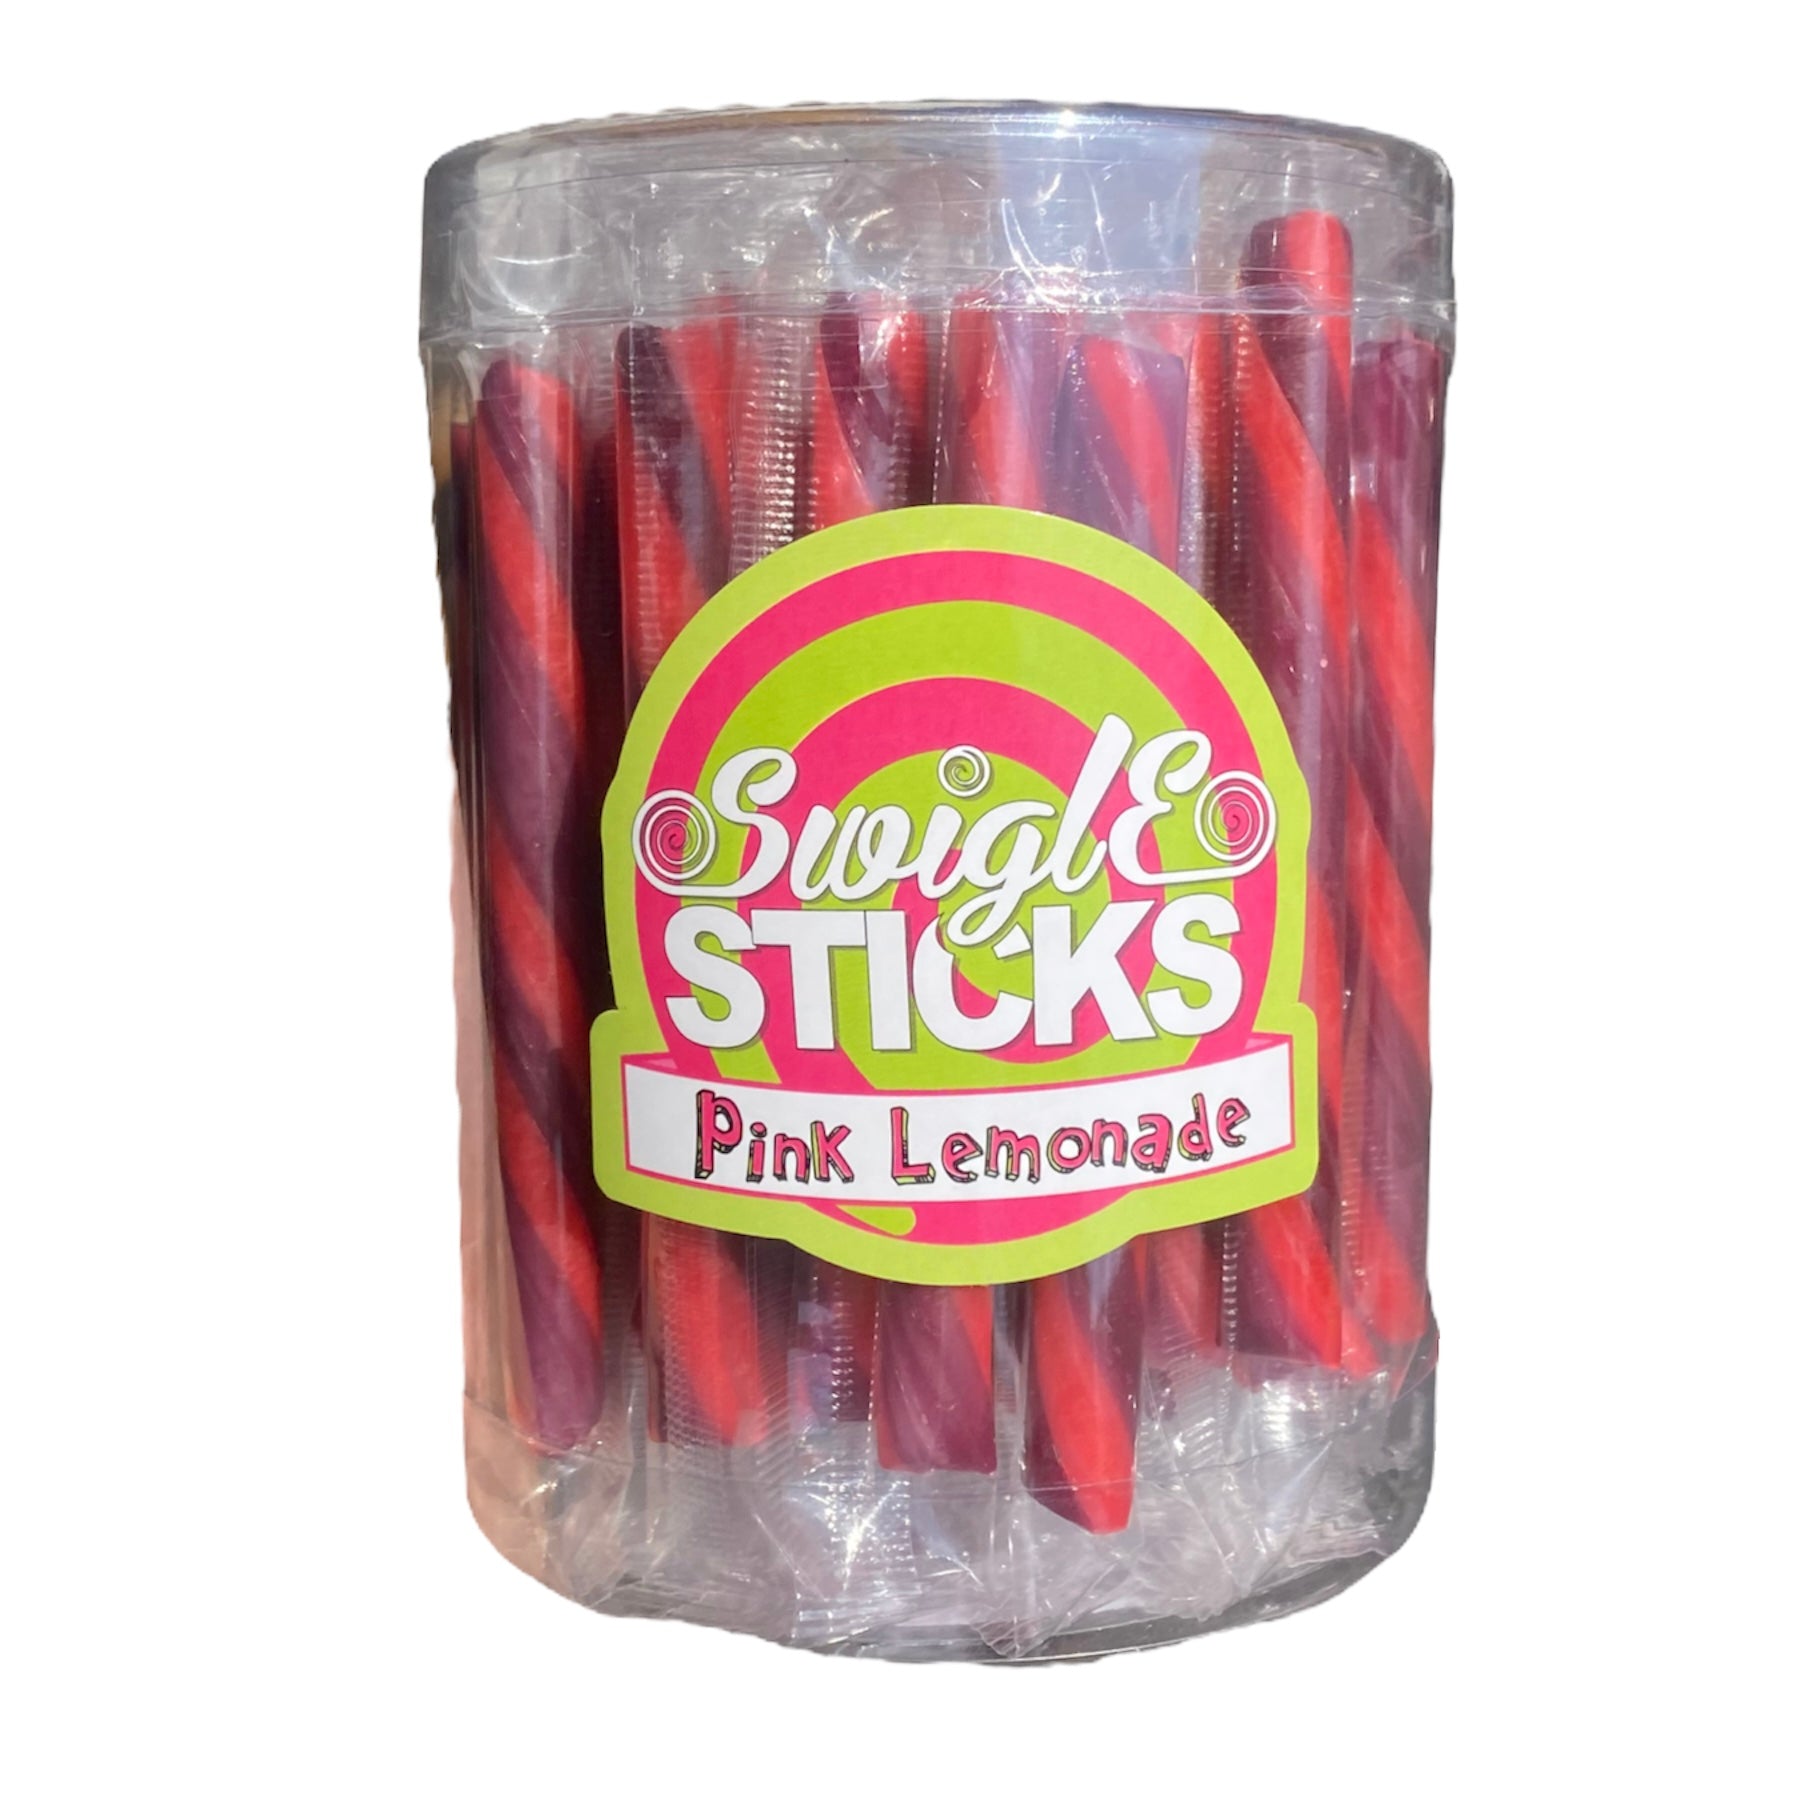 Pink lemonade sticks